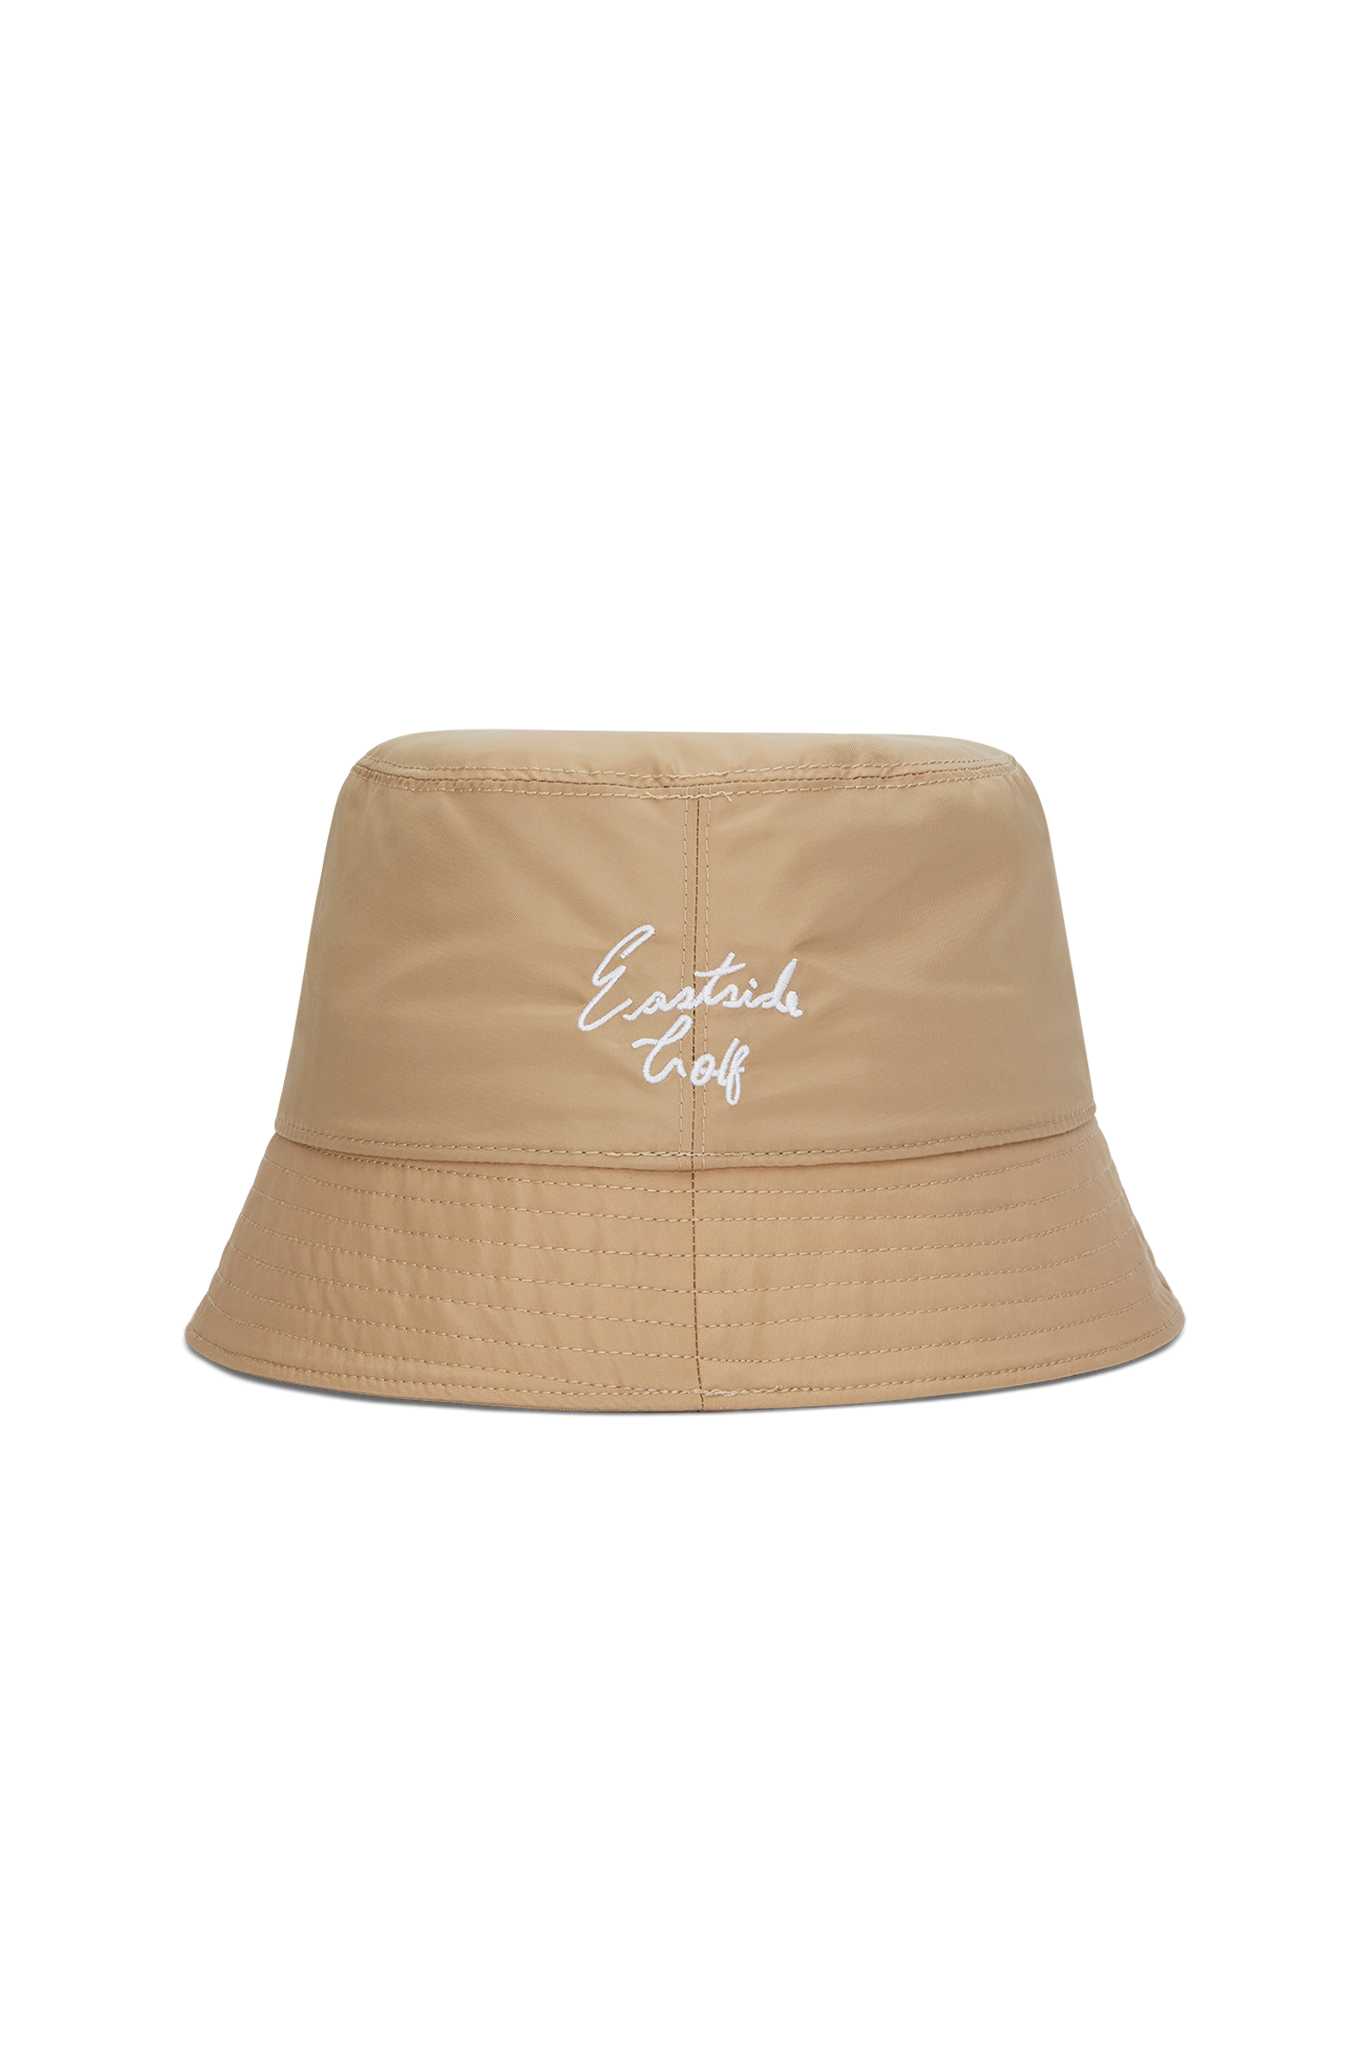 Eastside Golf Nylon Bucket Hat Khaki